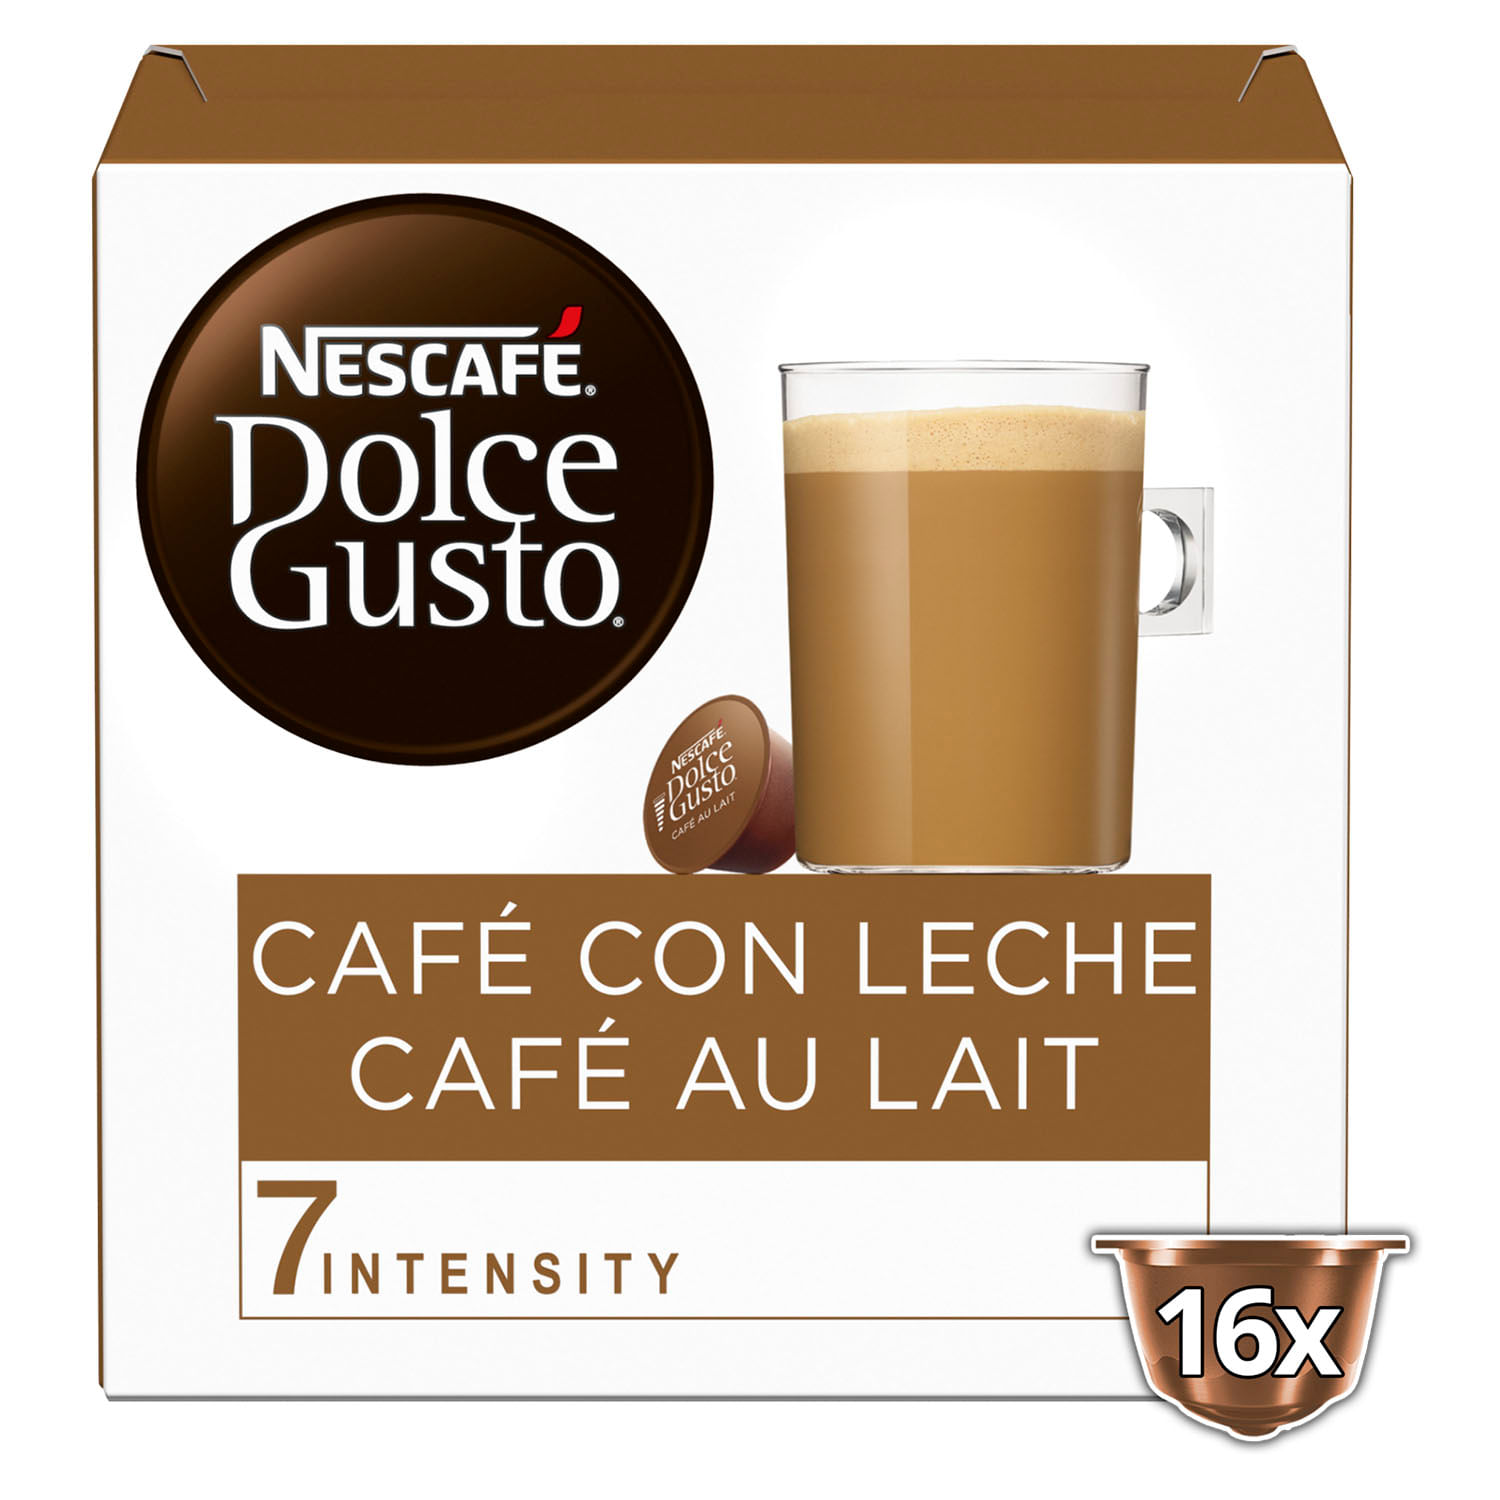 Coffee gold Café espresso en cápsulas Coffee Gold sin gluten 16 unidades  7,5 g